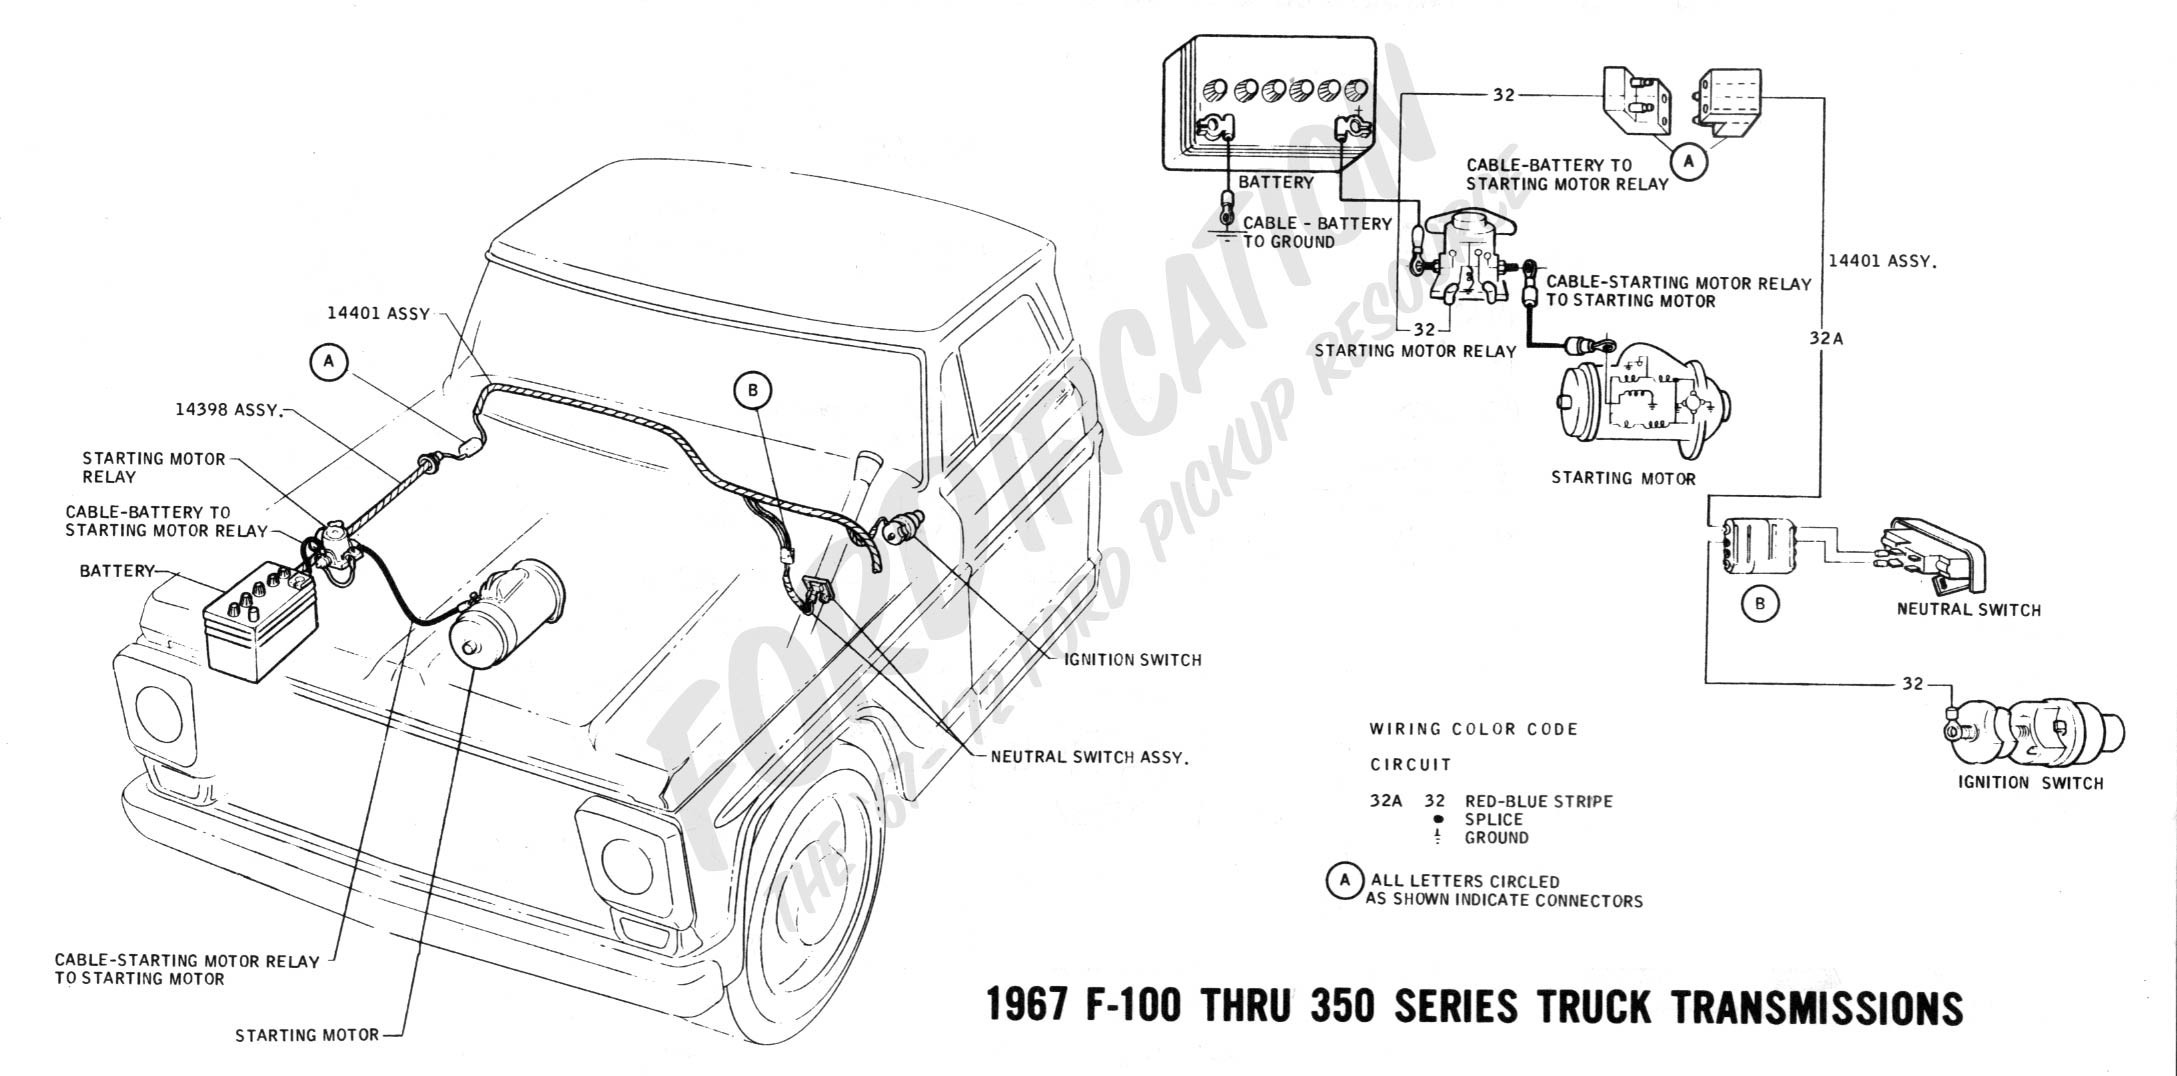 Ford F250 Starter solenoid Wiring Diagram Starter solenoid Wiring Diagram source Arquetipos 1967 F 100